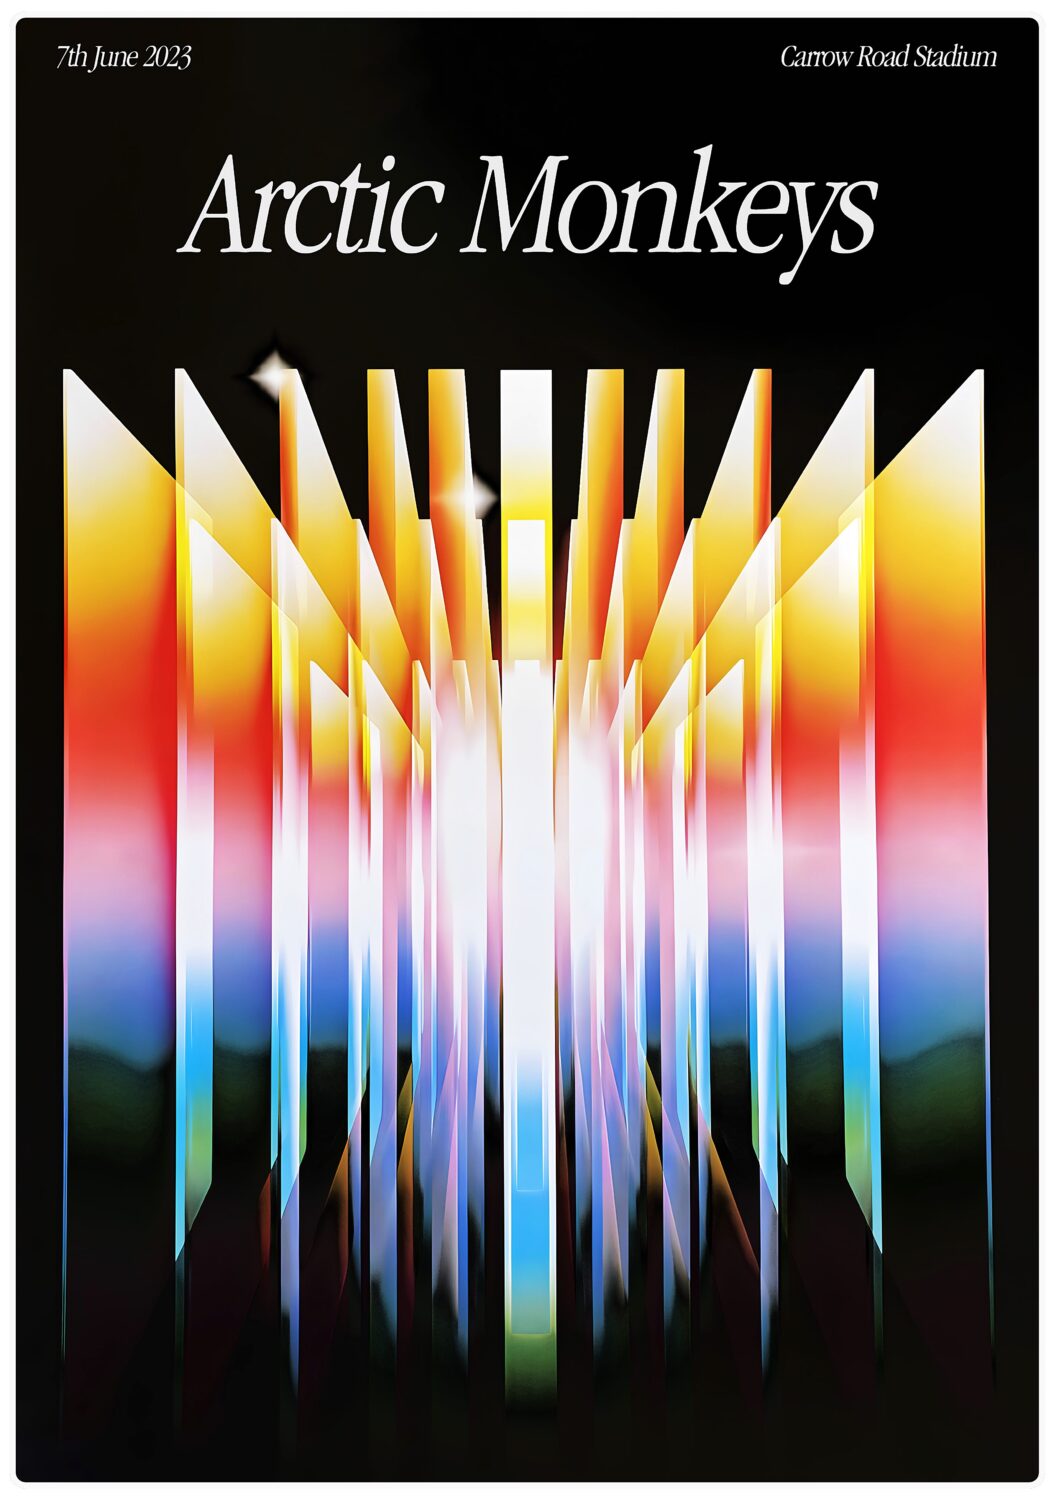 Arctic Monkeys - Norwich Carrow Road Stadium 2023 Tour Poster